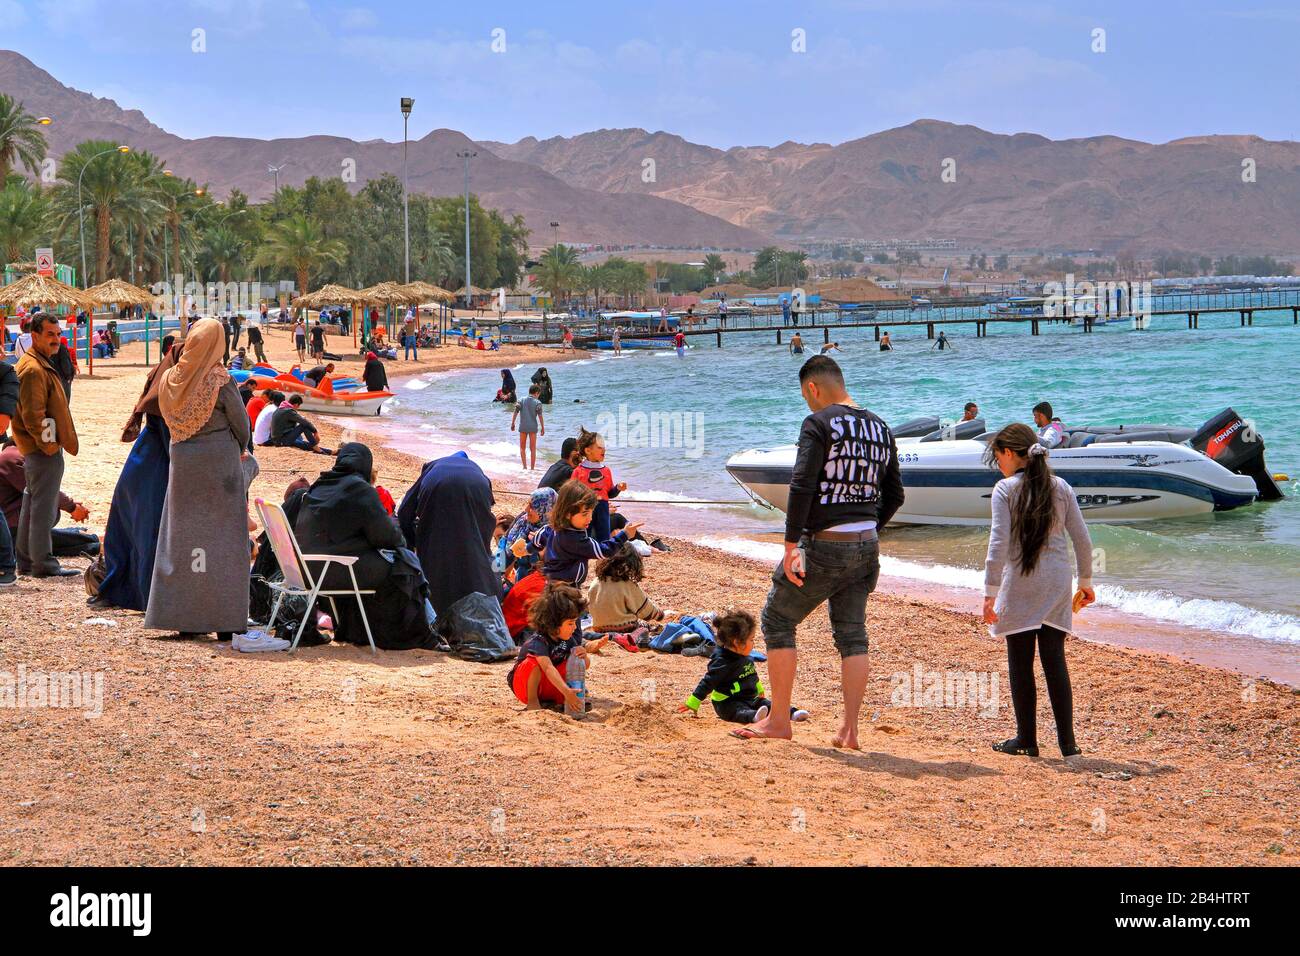 Les habitants de la plage de la ville d'Aqaba Aqaba, Golfe d'Aqaba, Mer Rouge, Jordanie Banque D'Images